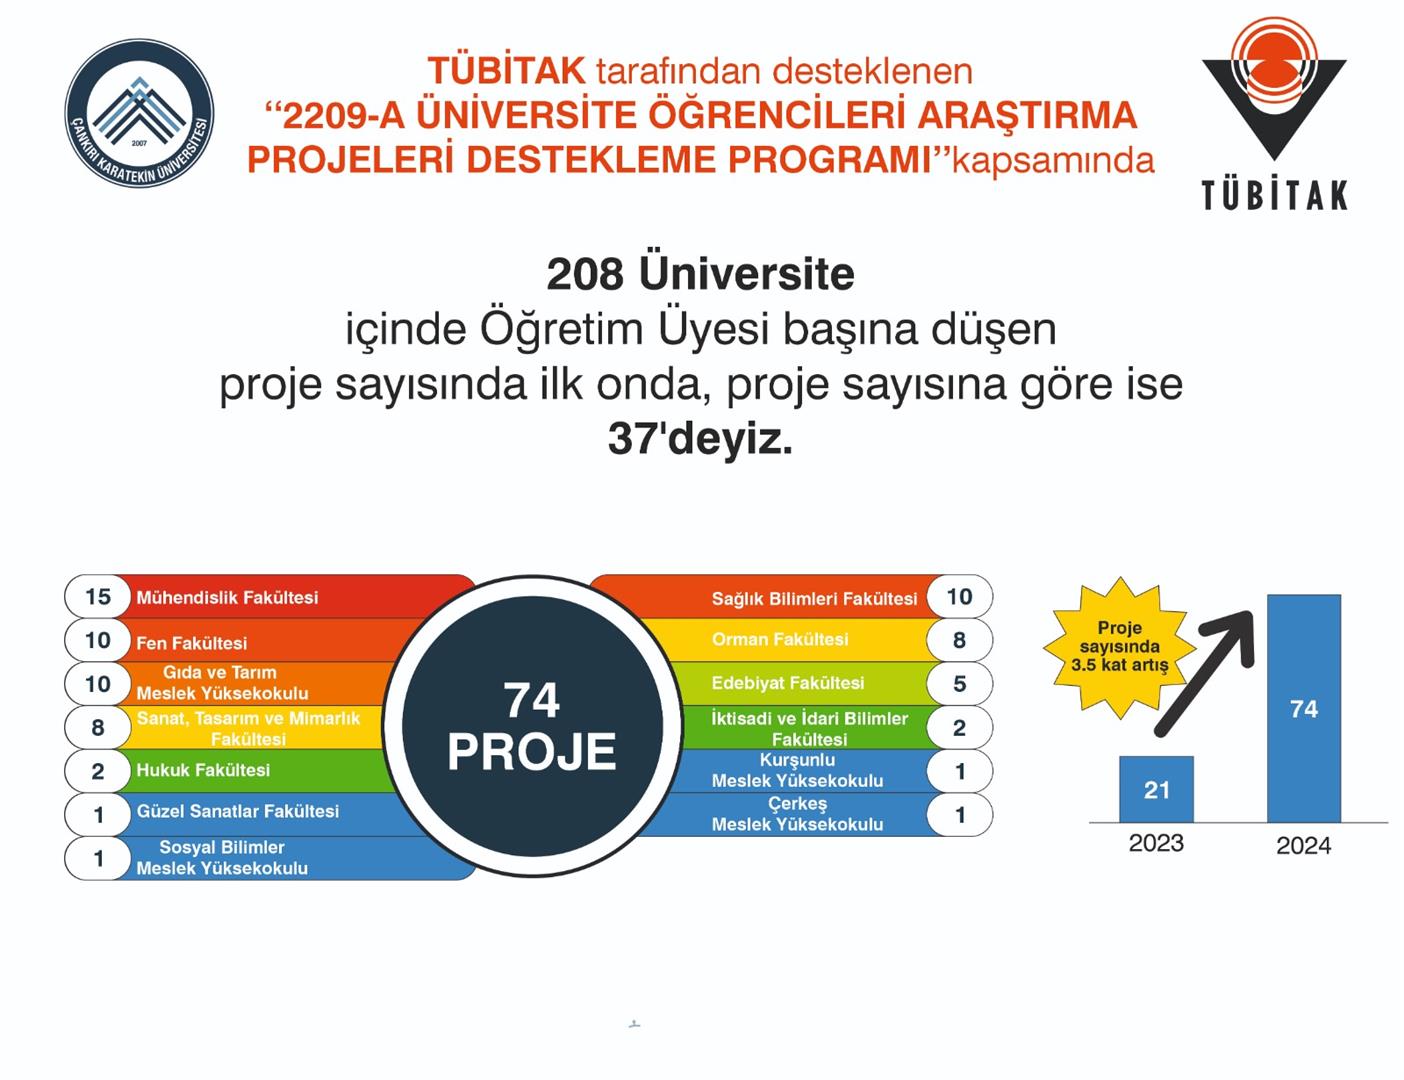 ÇAKÜ is 37th among 208 Universities